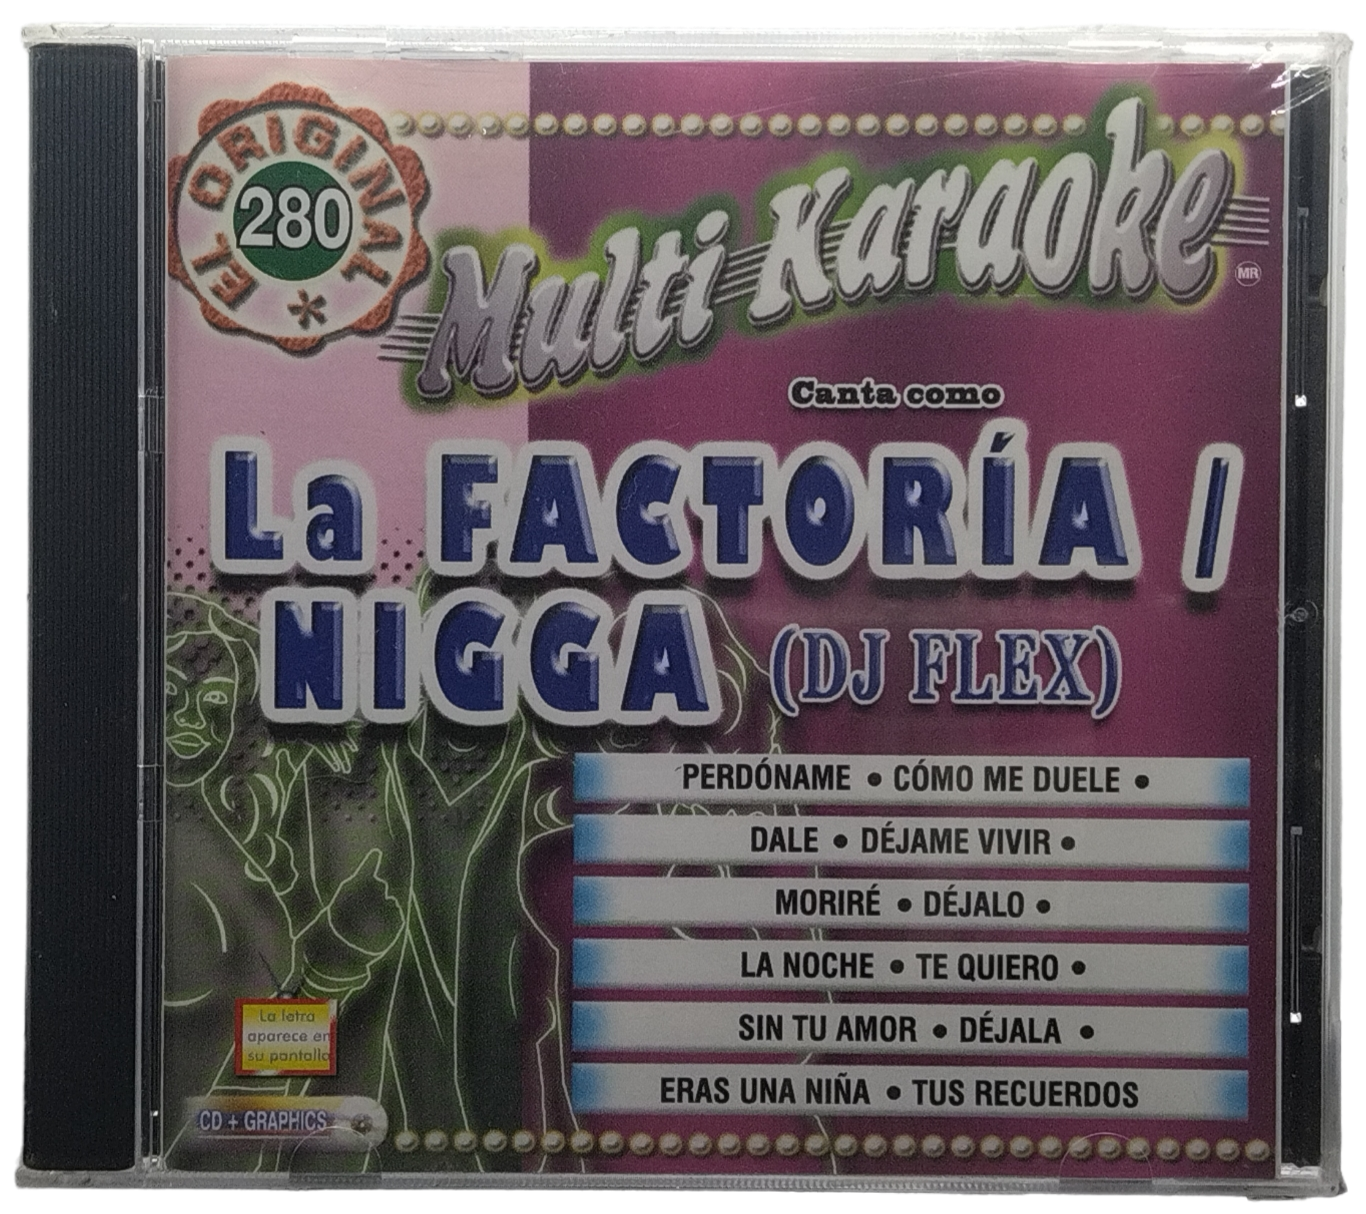 multi karaoke 8 + 8  - canta como la factoria / nigga